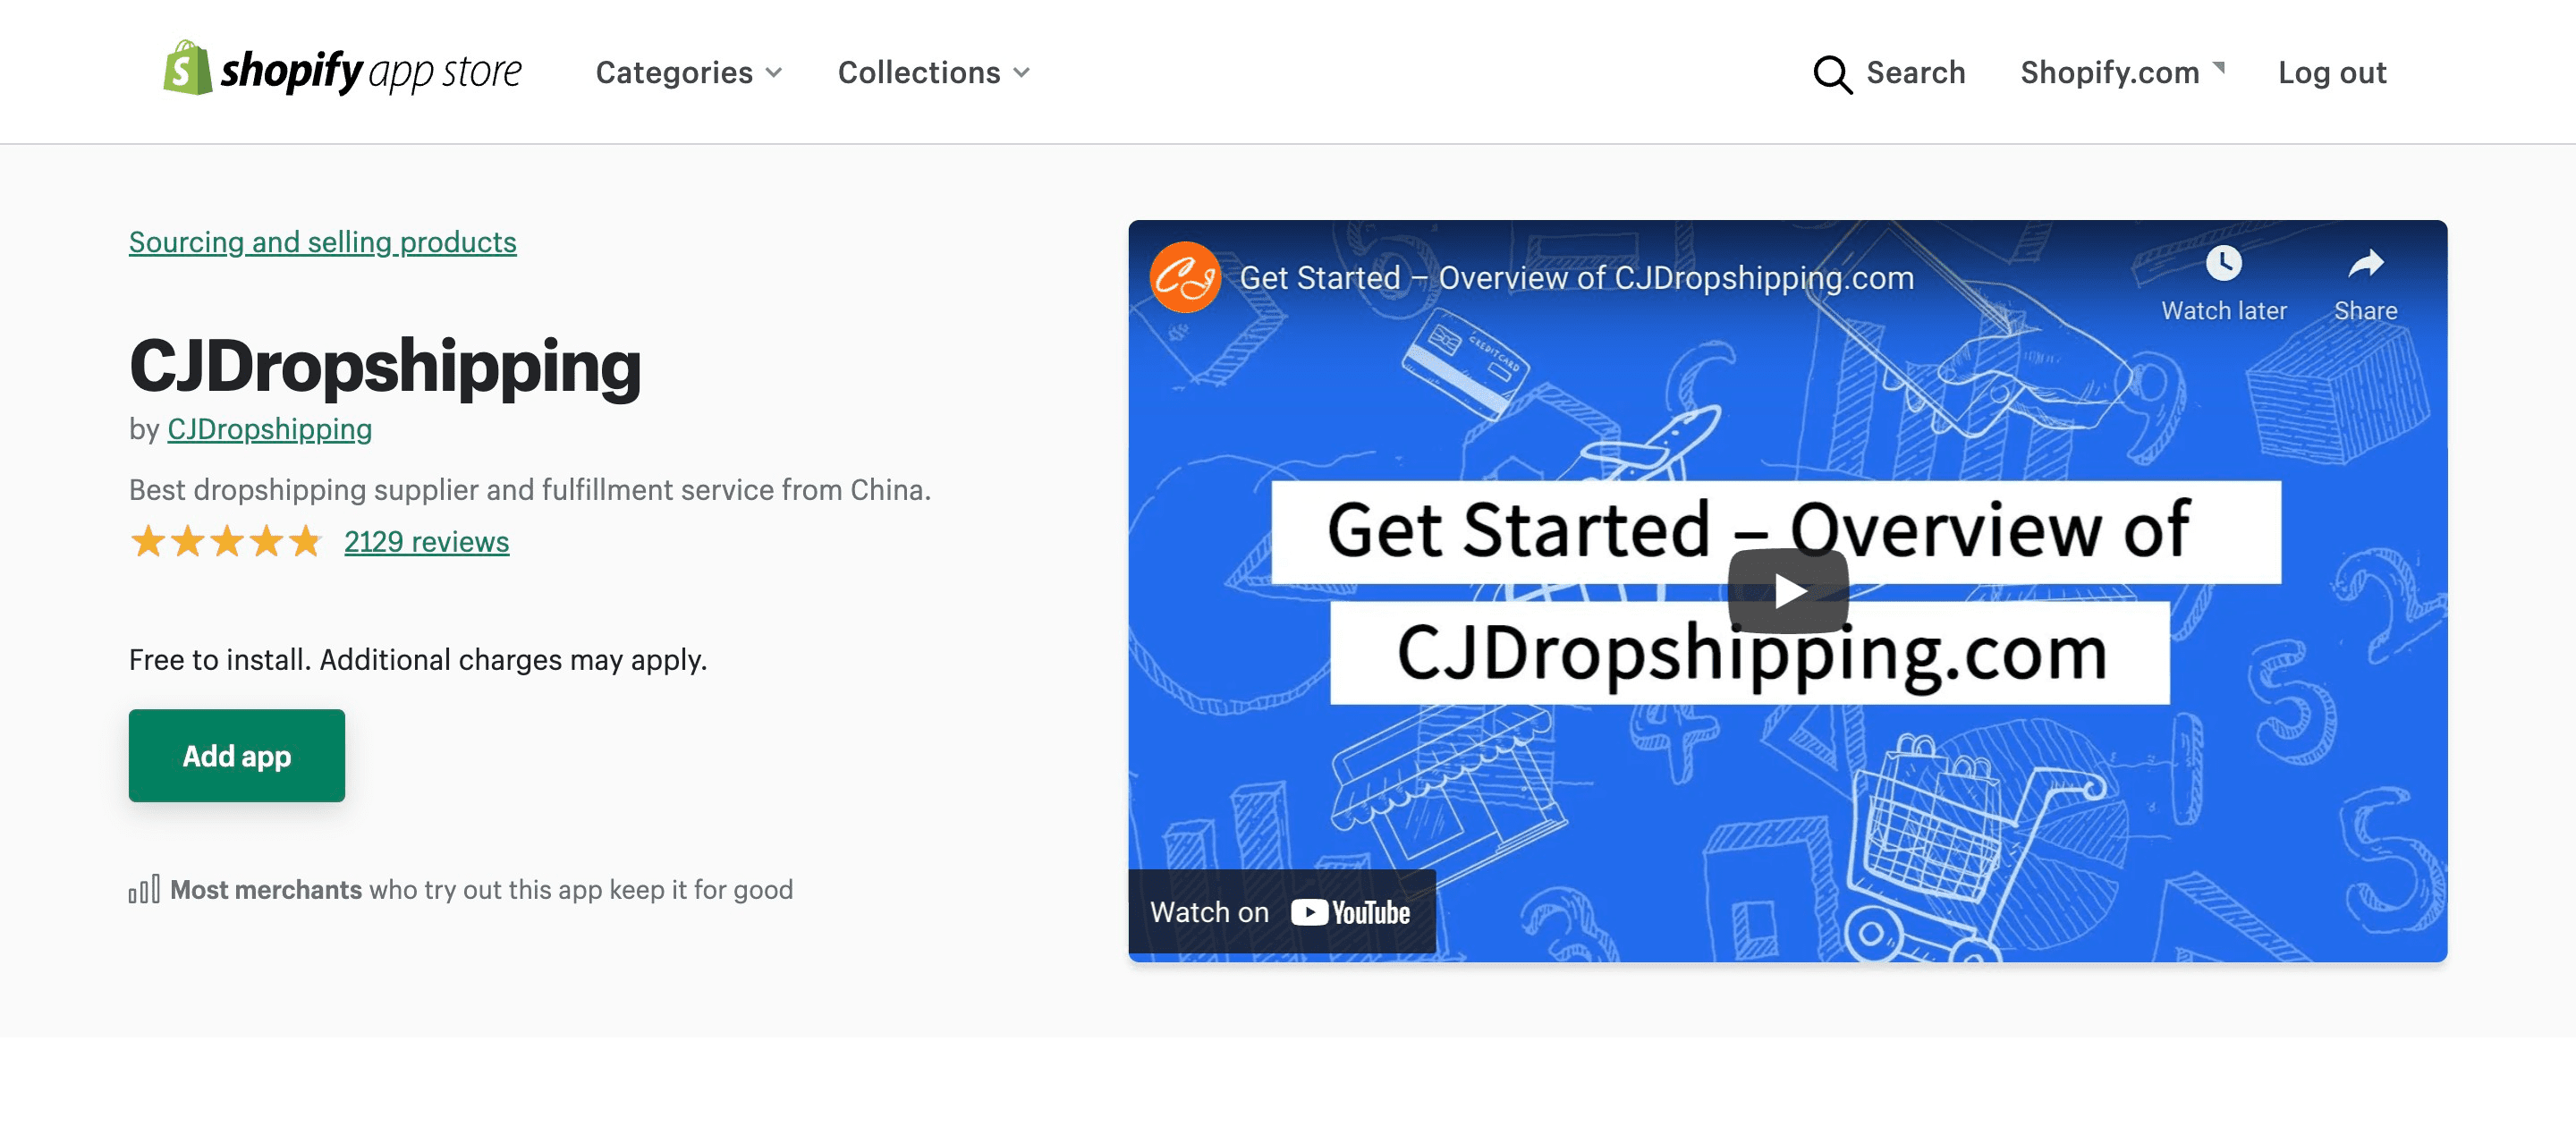 Shopify Dropshipping Suppliers: CJDropshipping